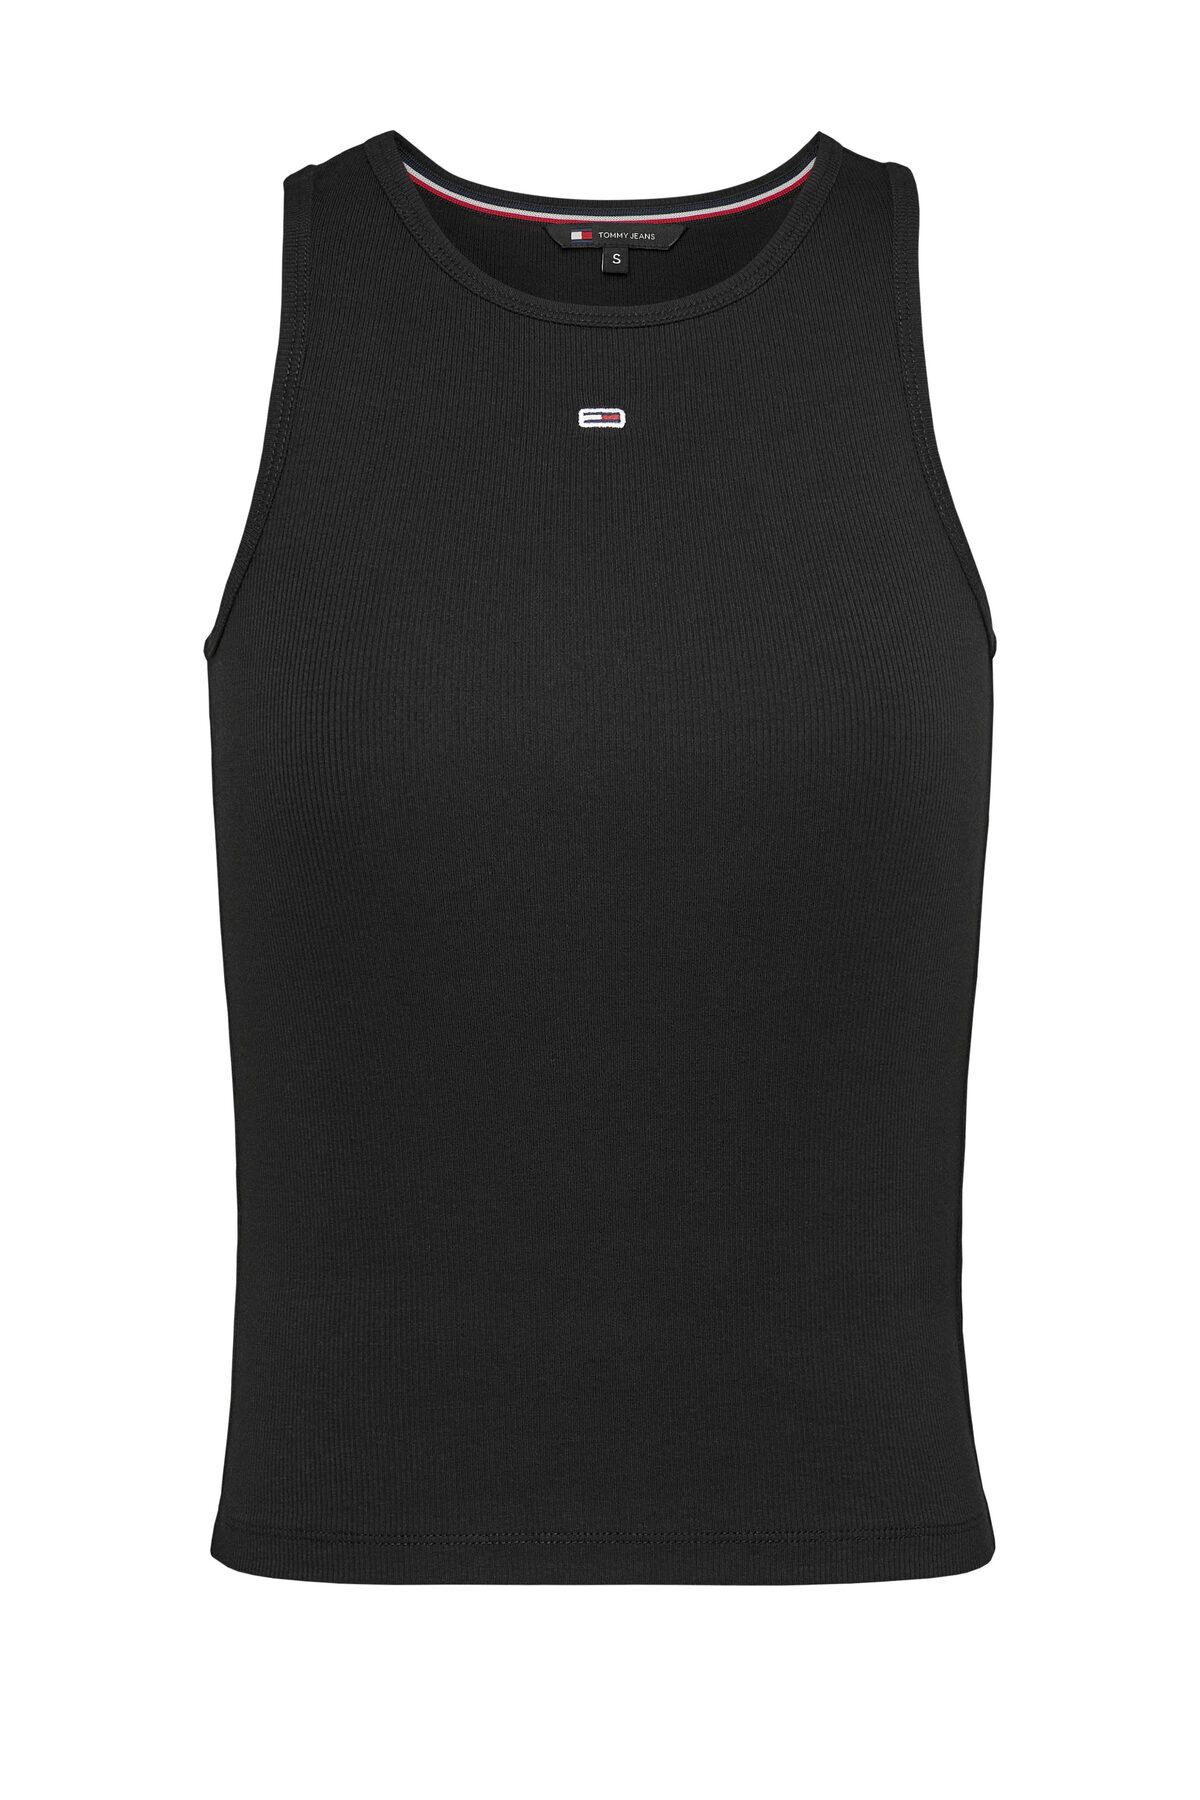 Tommy Hilfiger Black Bluz For Kadın / Kız